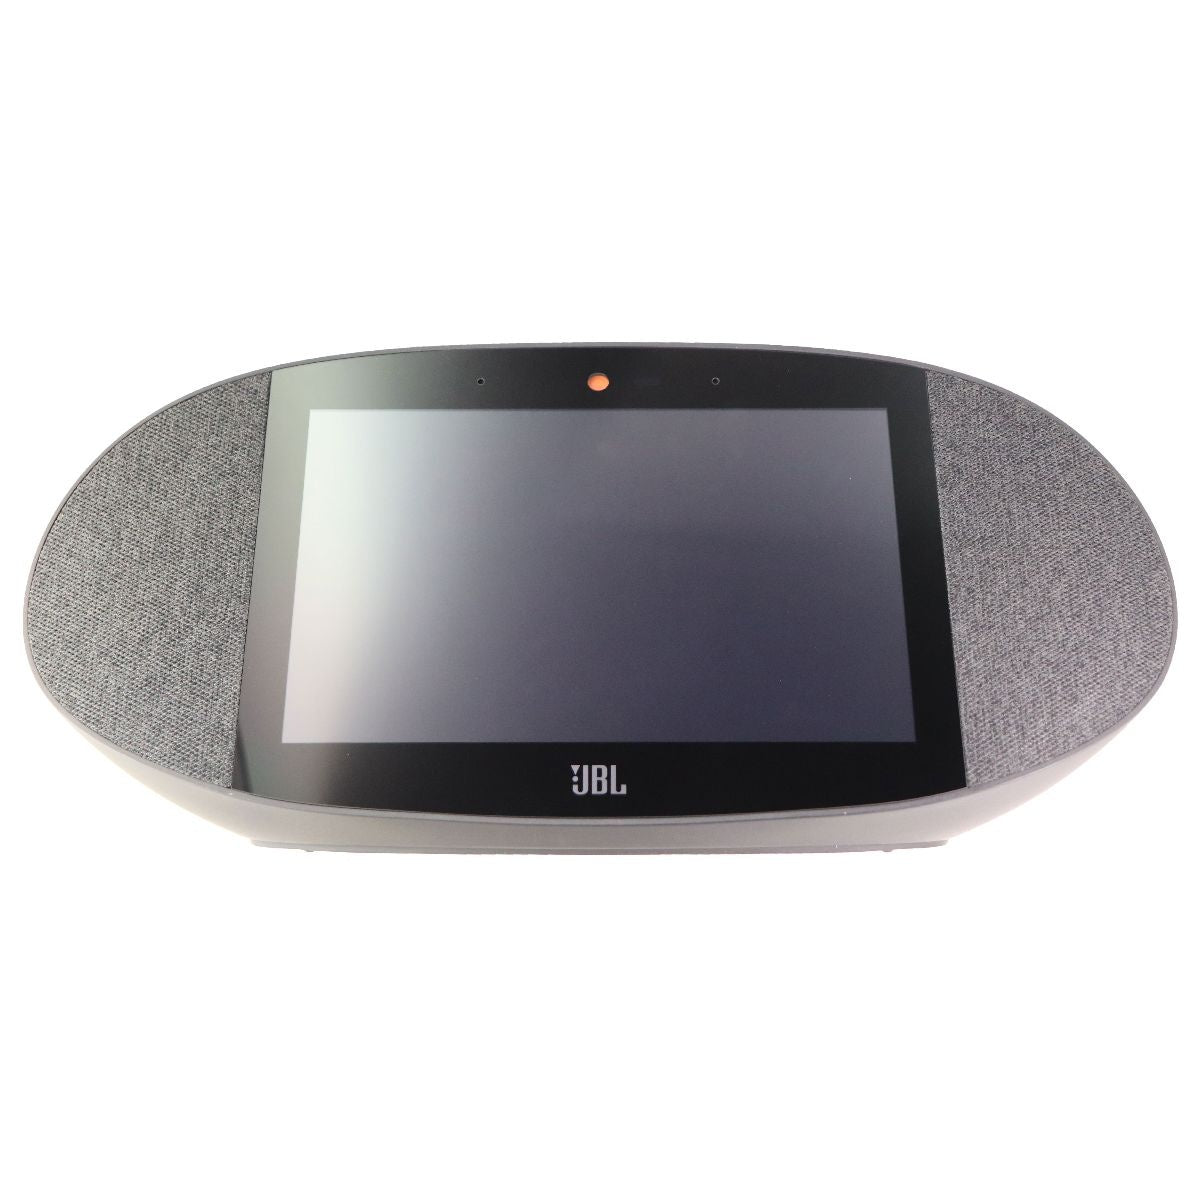 (DEMO MODEL) JBL Link View Portable Smart Speaker - Black Home Multimedia - Home Speakers & Subwoofers JBL    - Simple Cell Bulk Wholesale Pricing - USA Seller